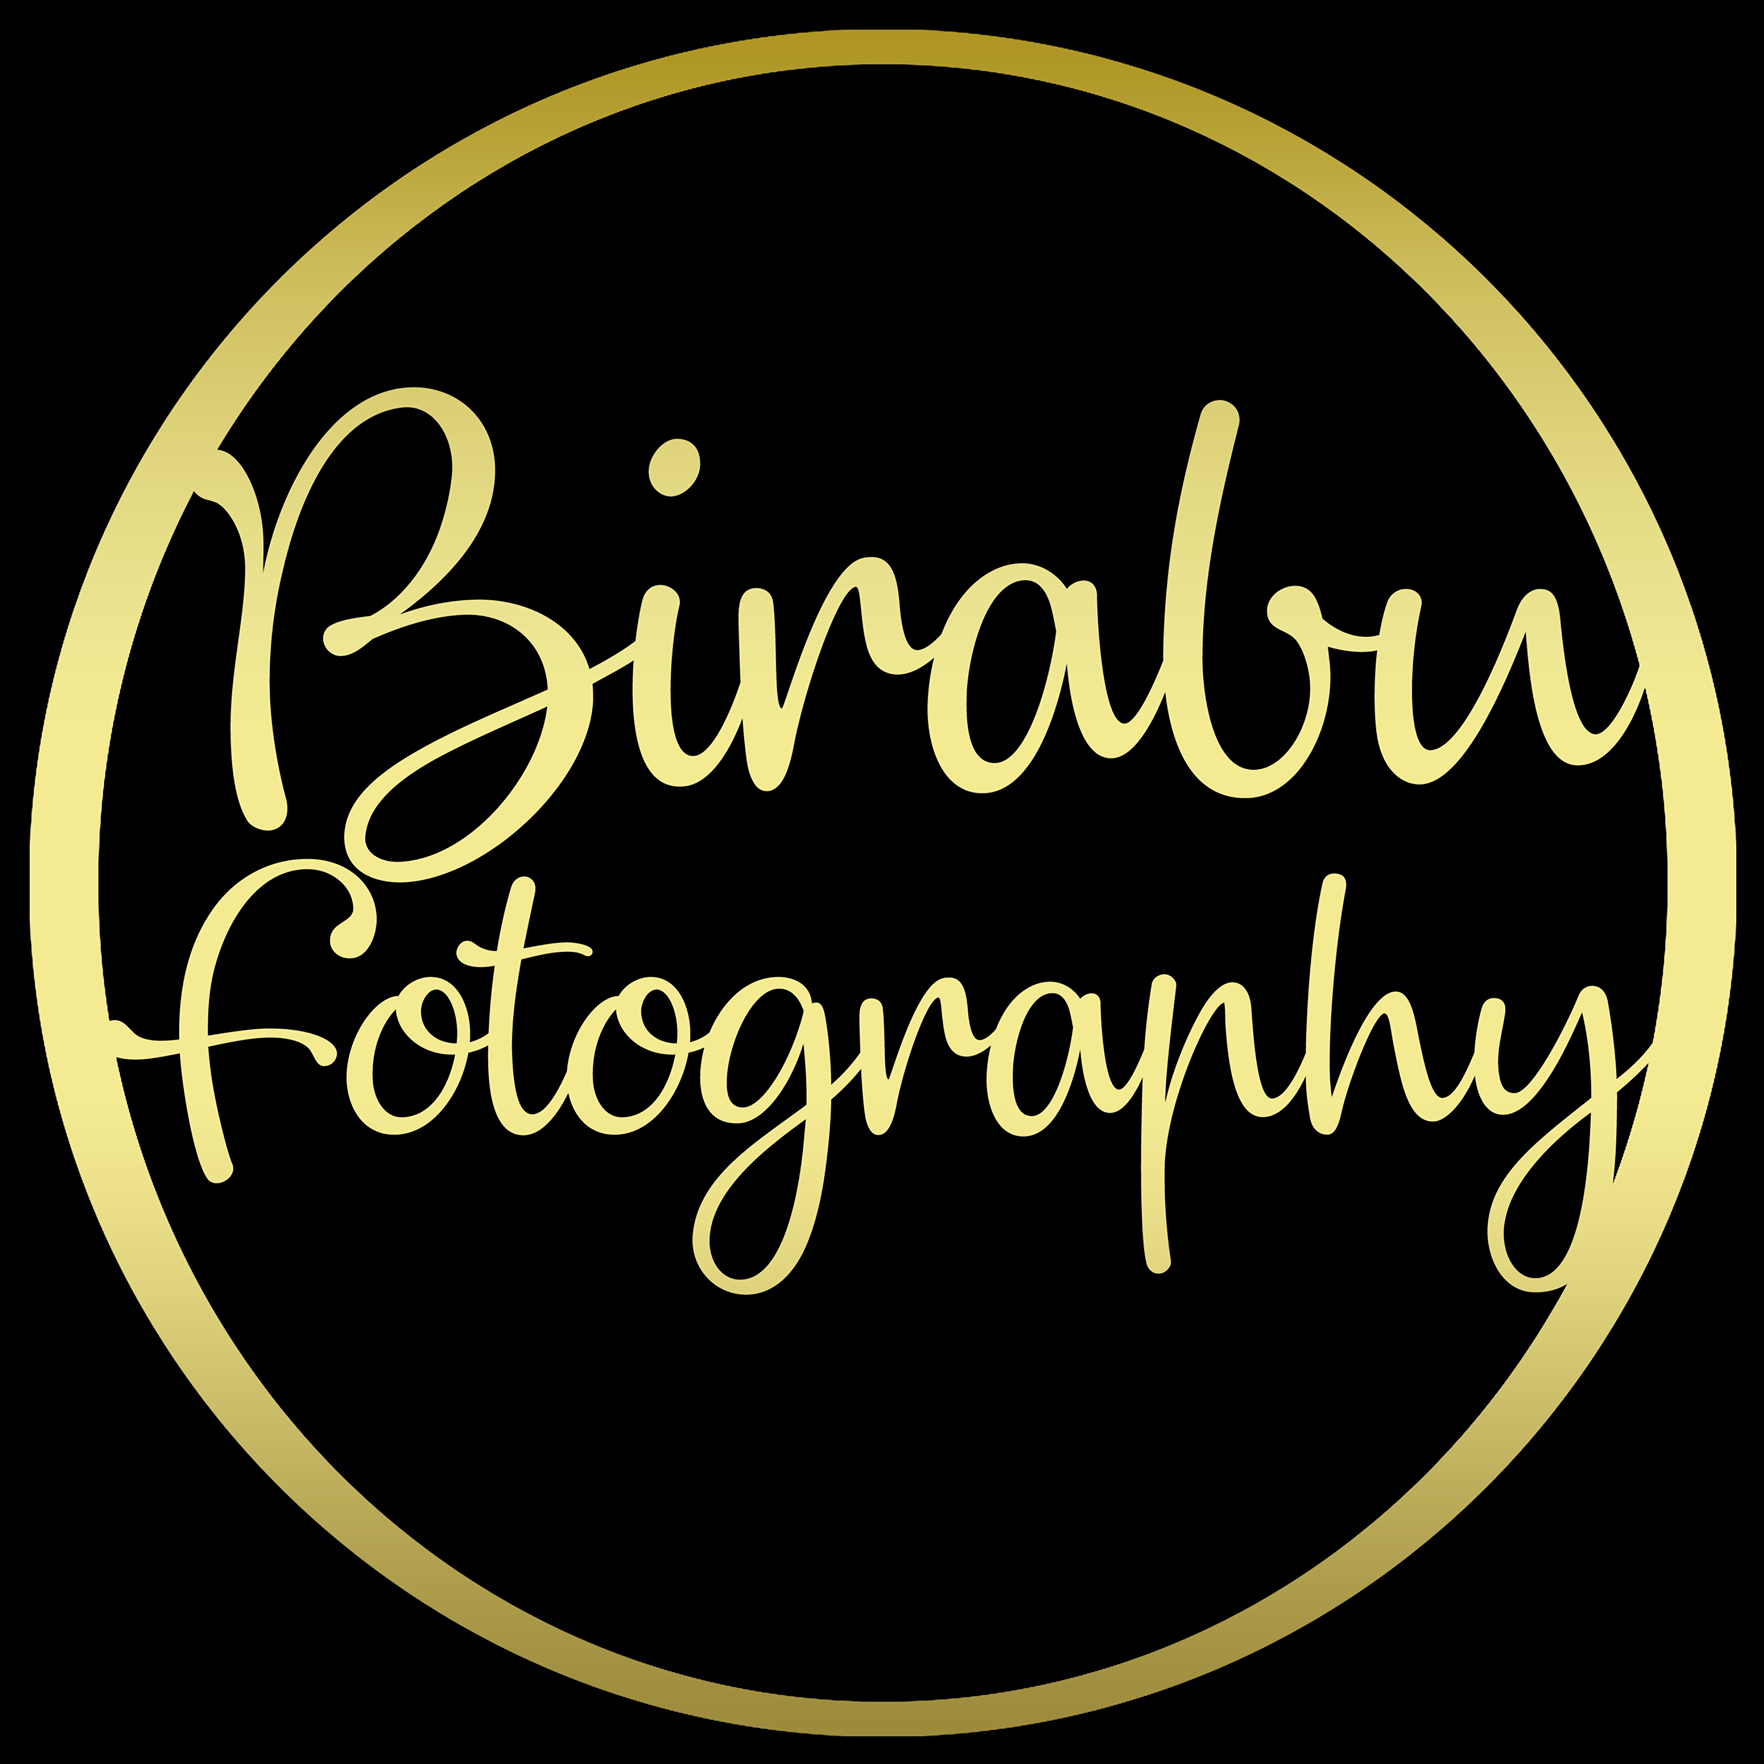 Birabu’s fotography